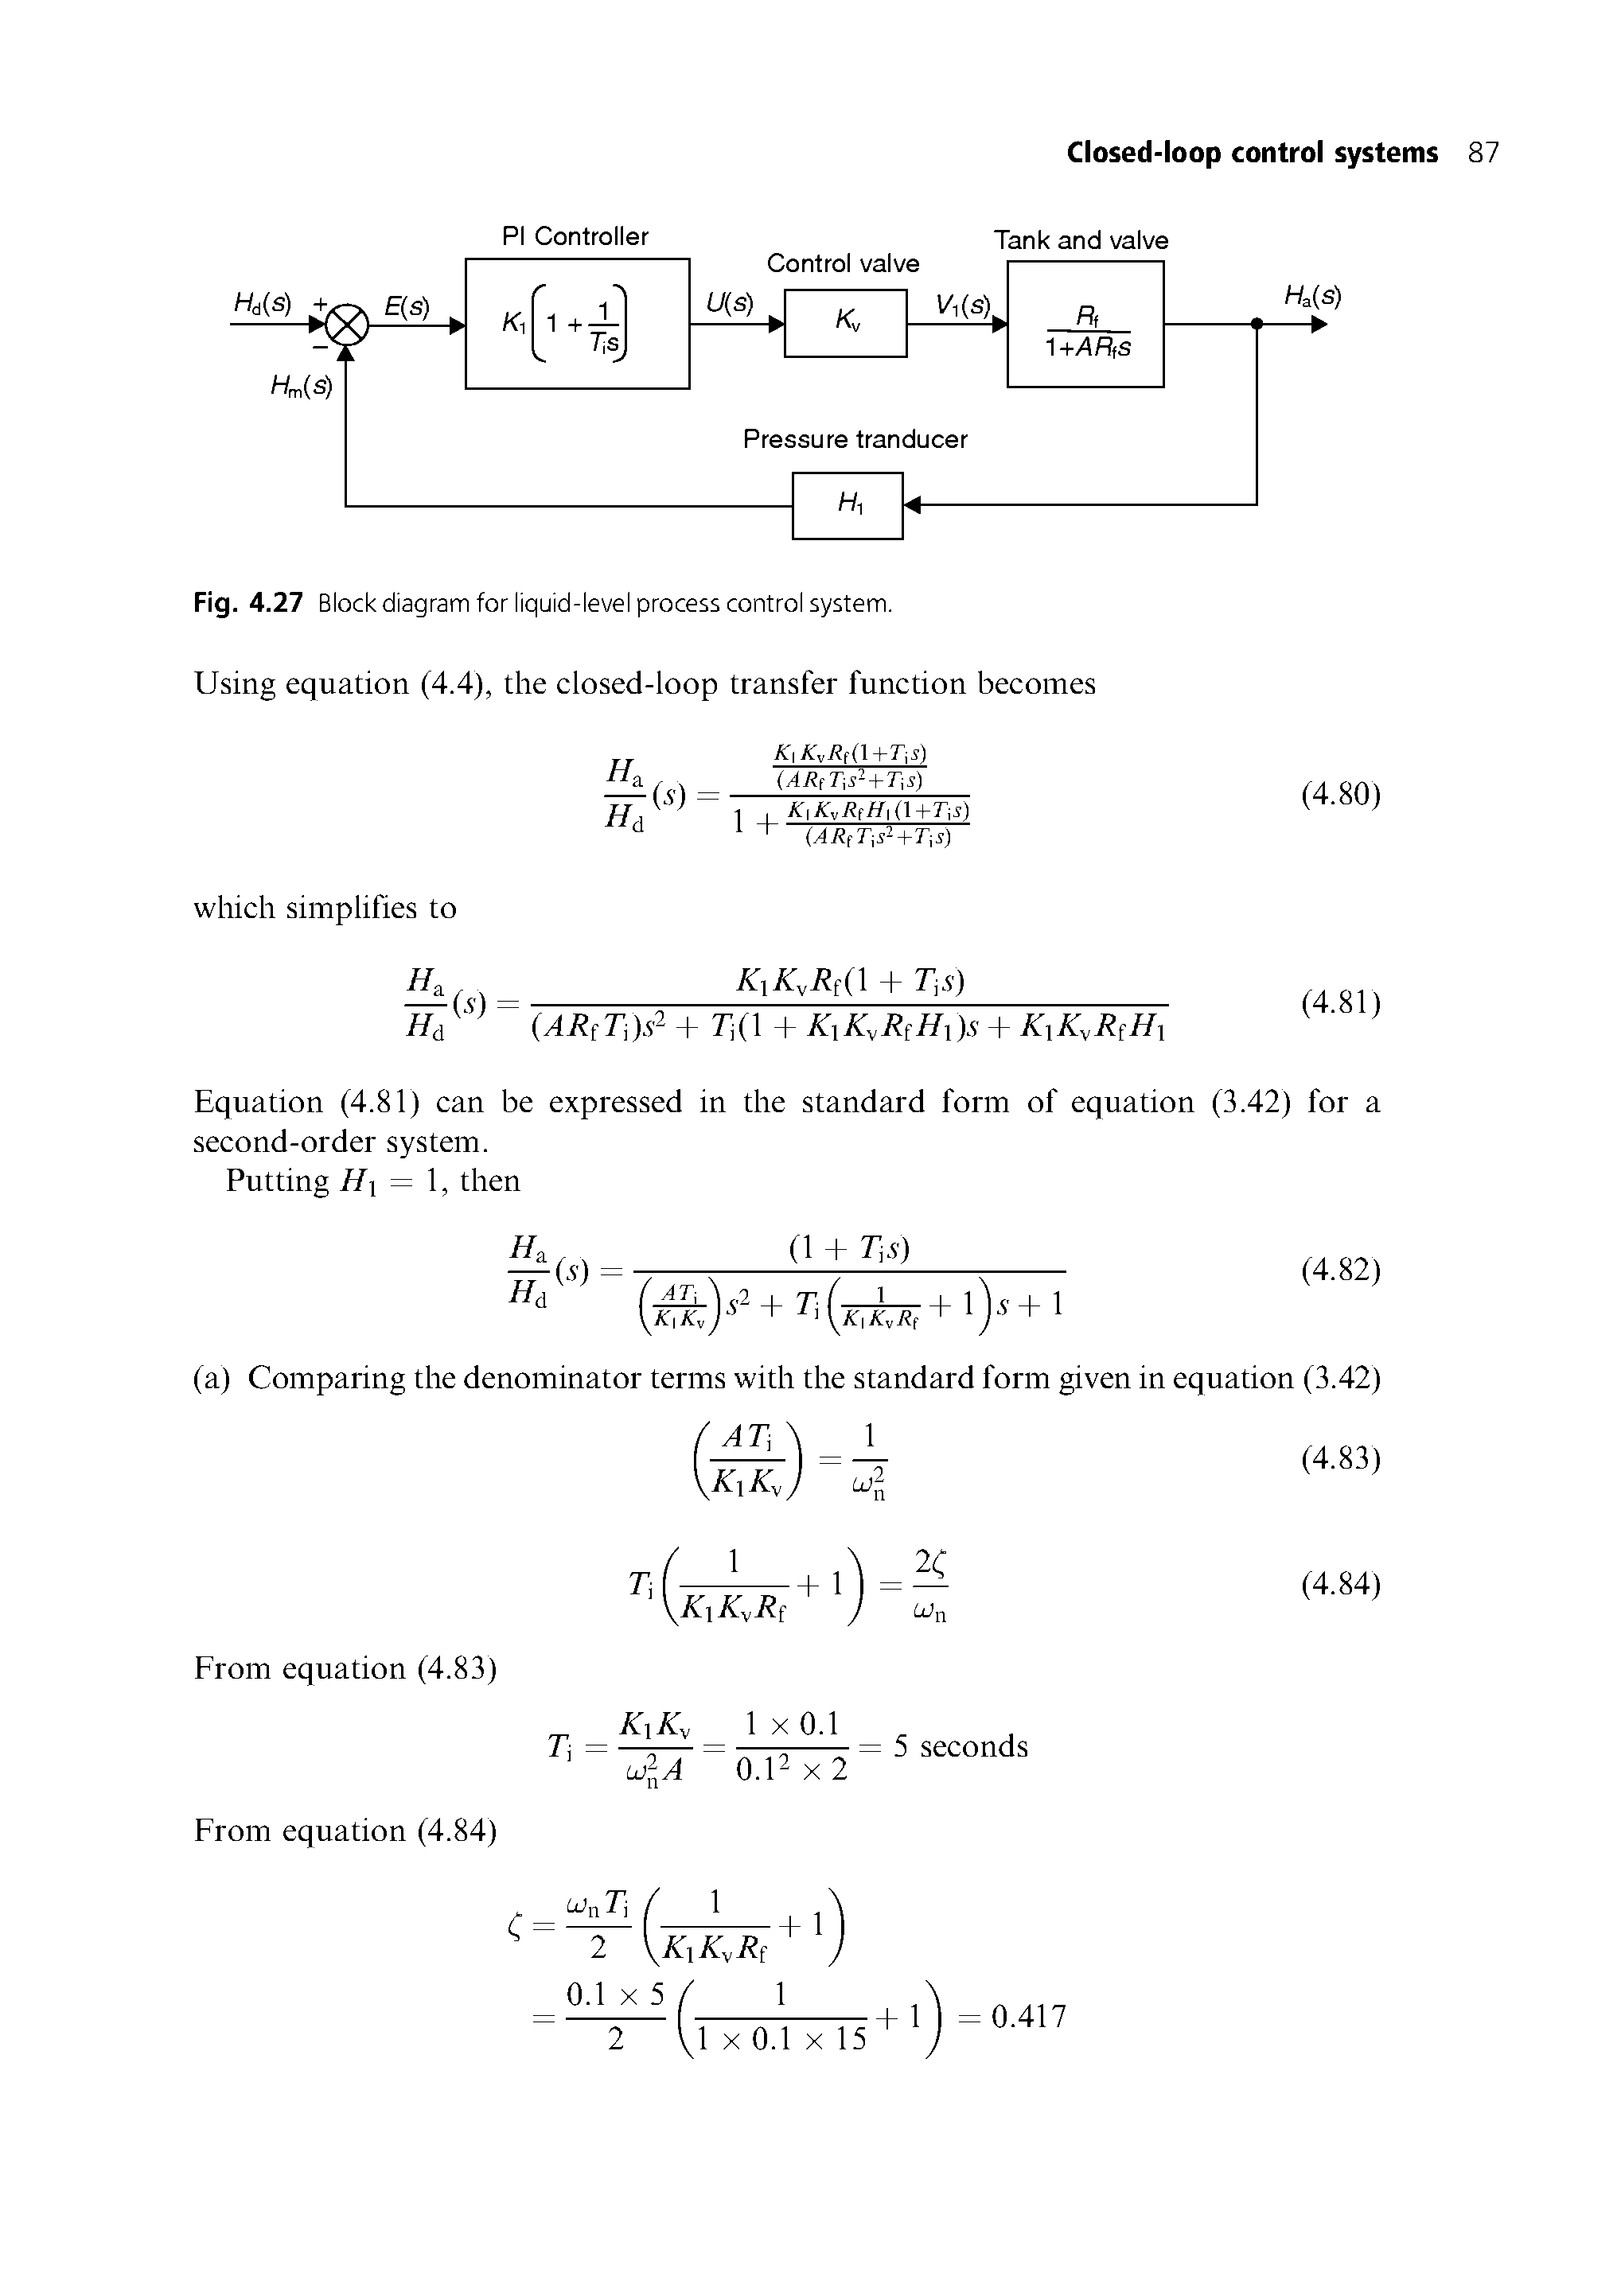 Fig. 4.27 Block diagram for liquid-level process control system.